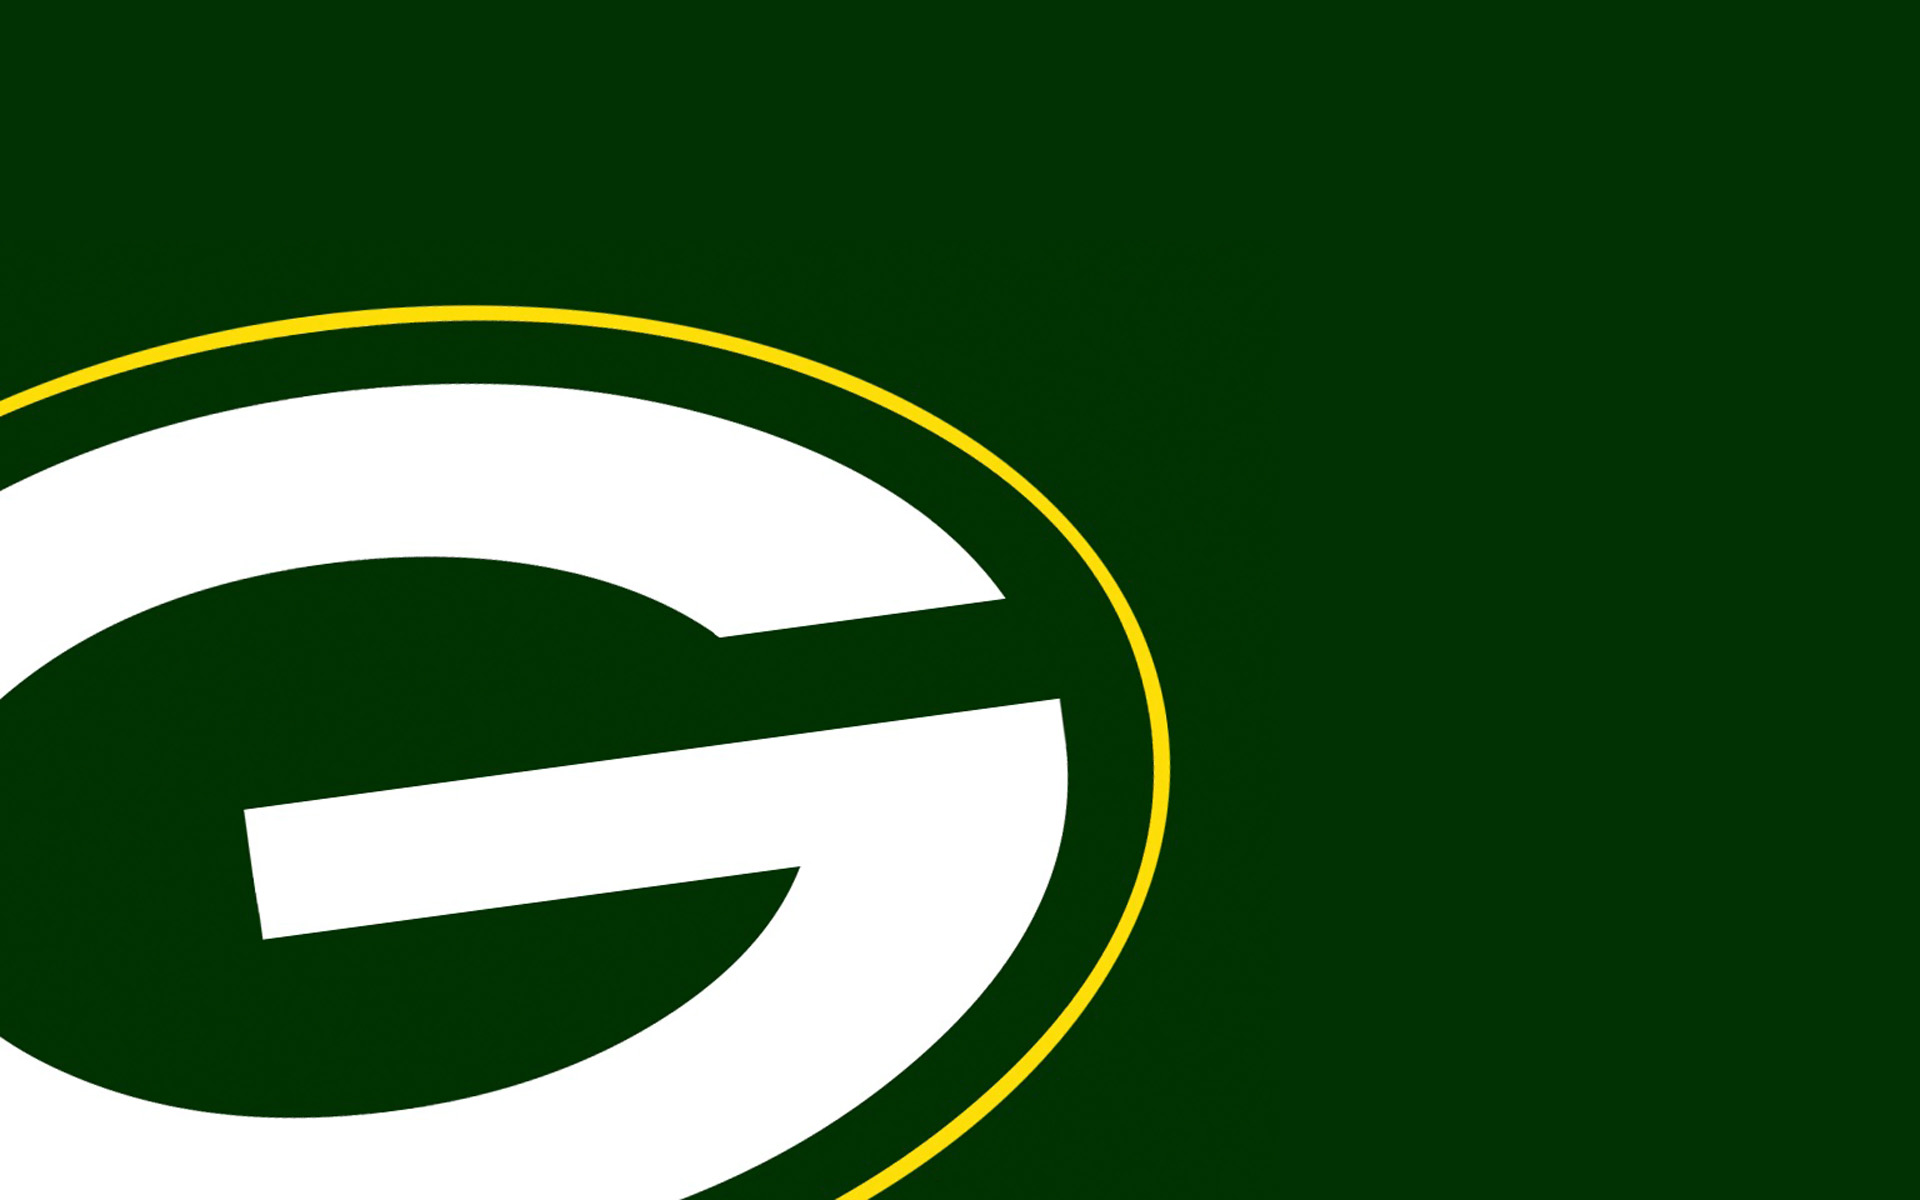 Free Green Bay Packers Desktop Image Green Bay Packers